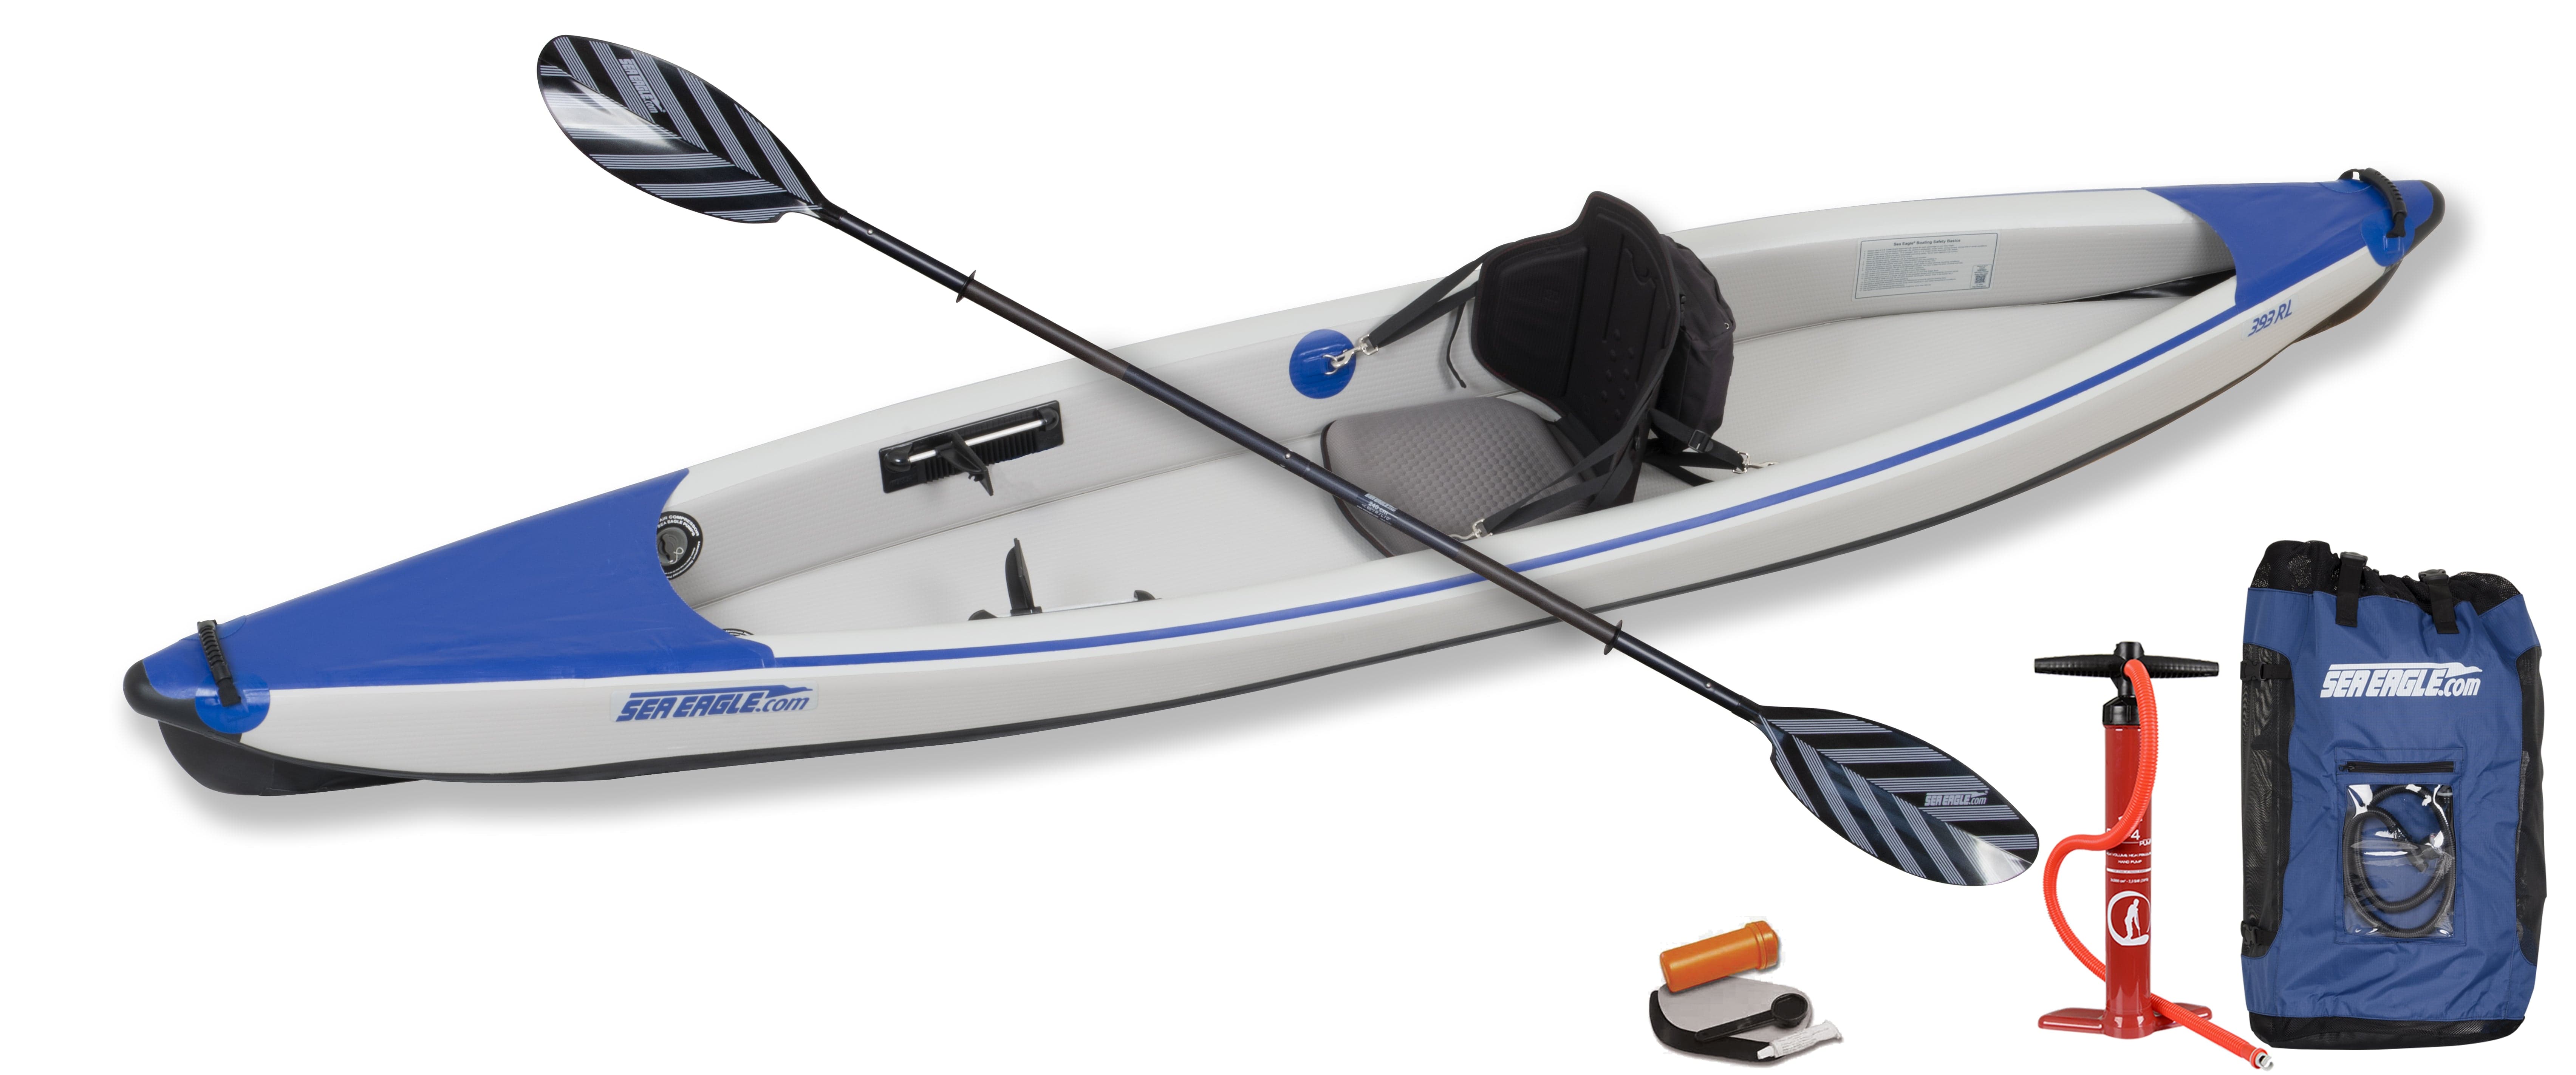 SeaEagle Inflatable Kayak Sea Eagle - 393RL Pro One Person 12'10" White/Blue RazorLite Inflatable Kayak ( 393RLK_P )